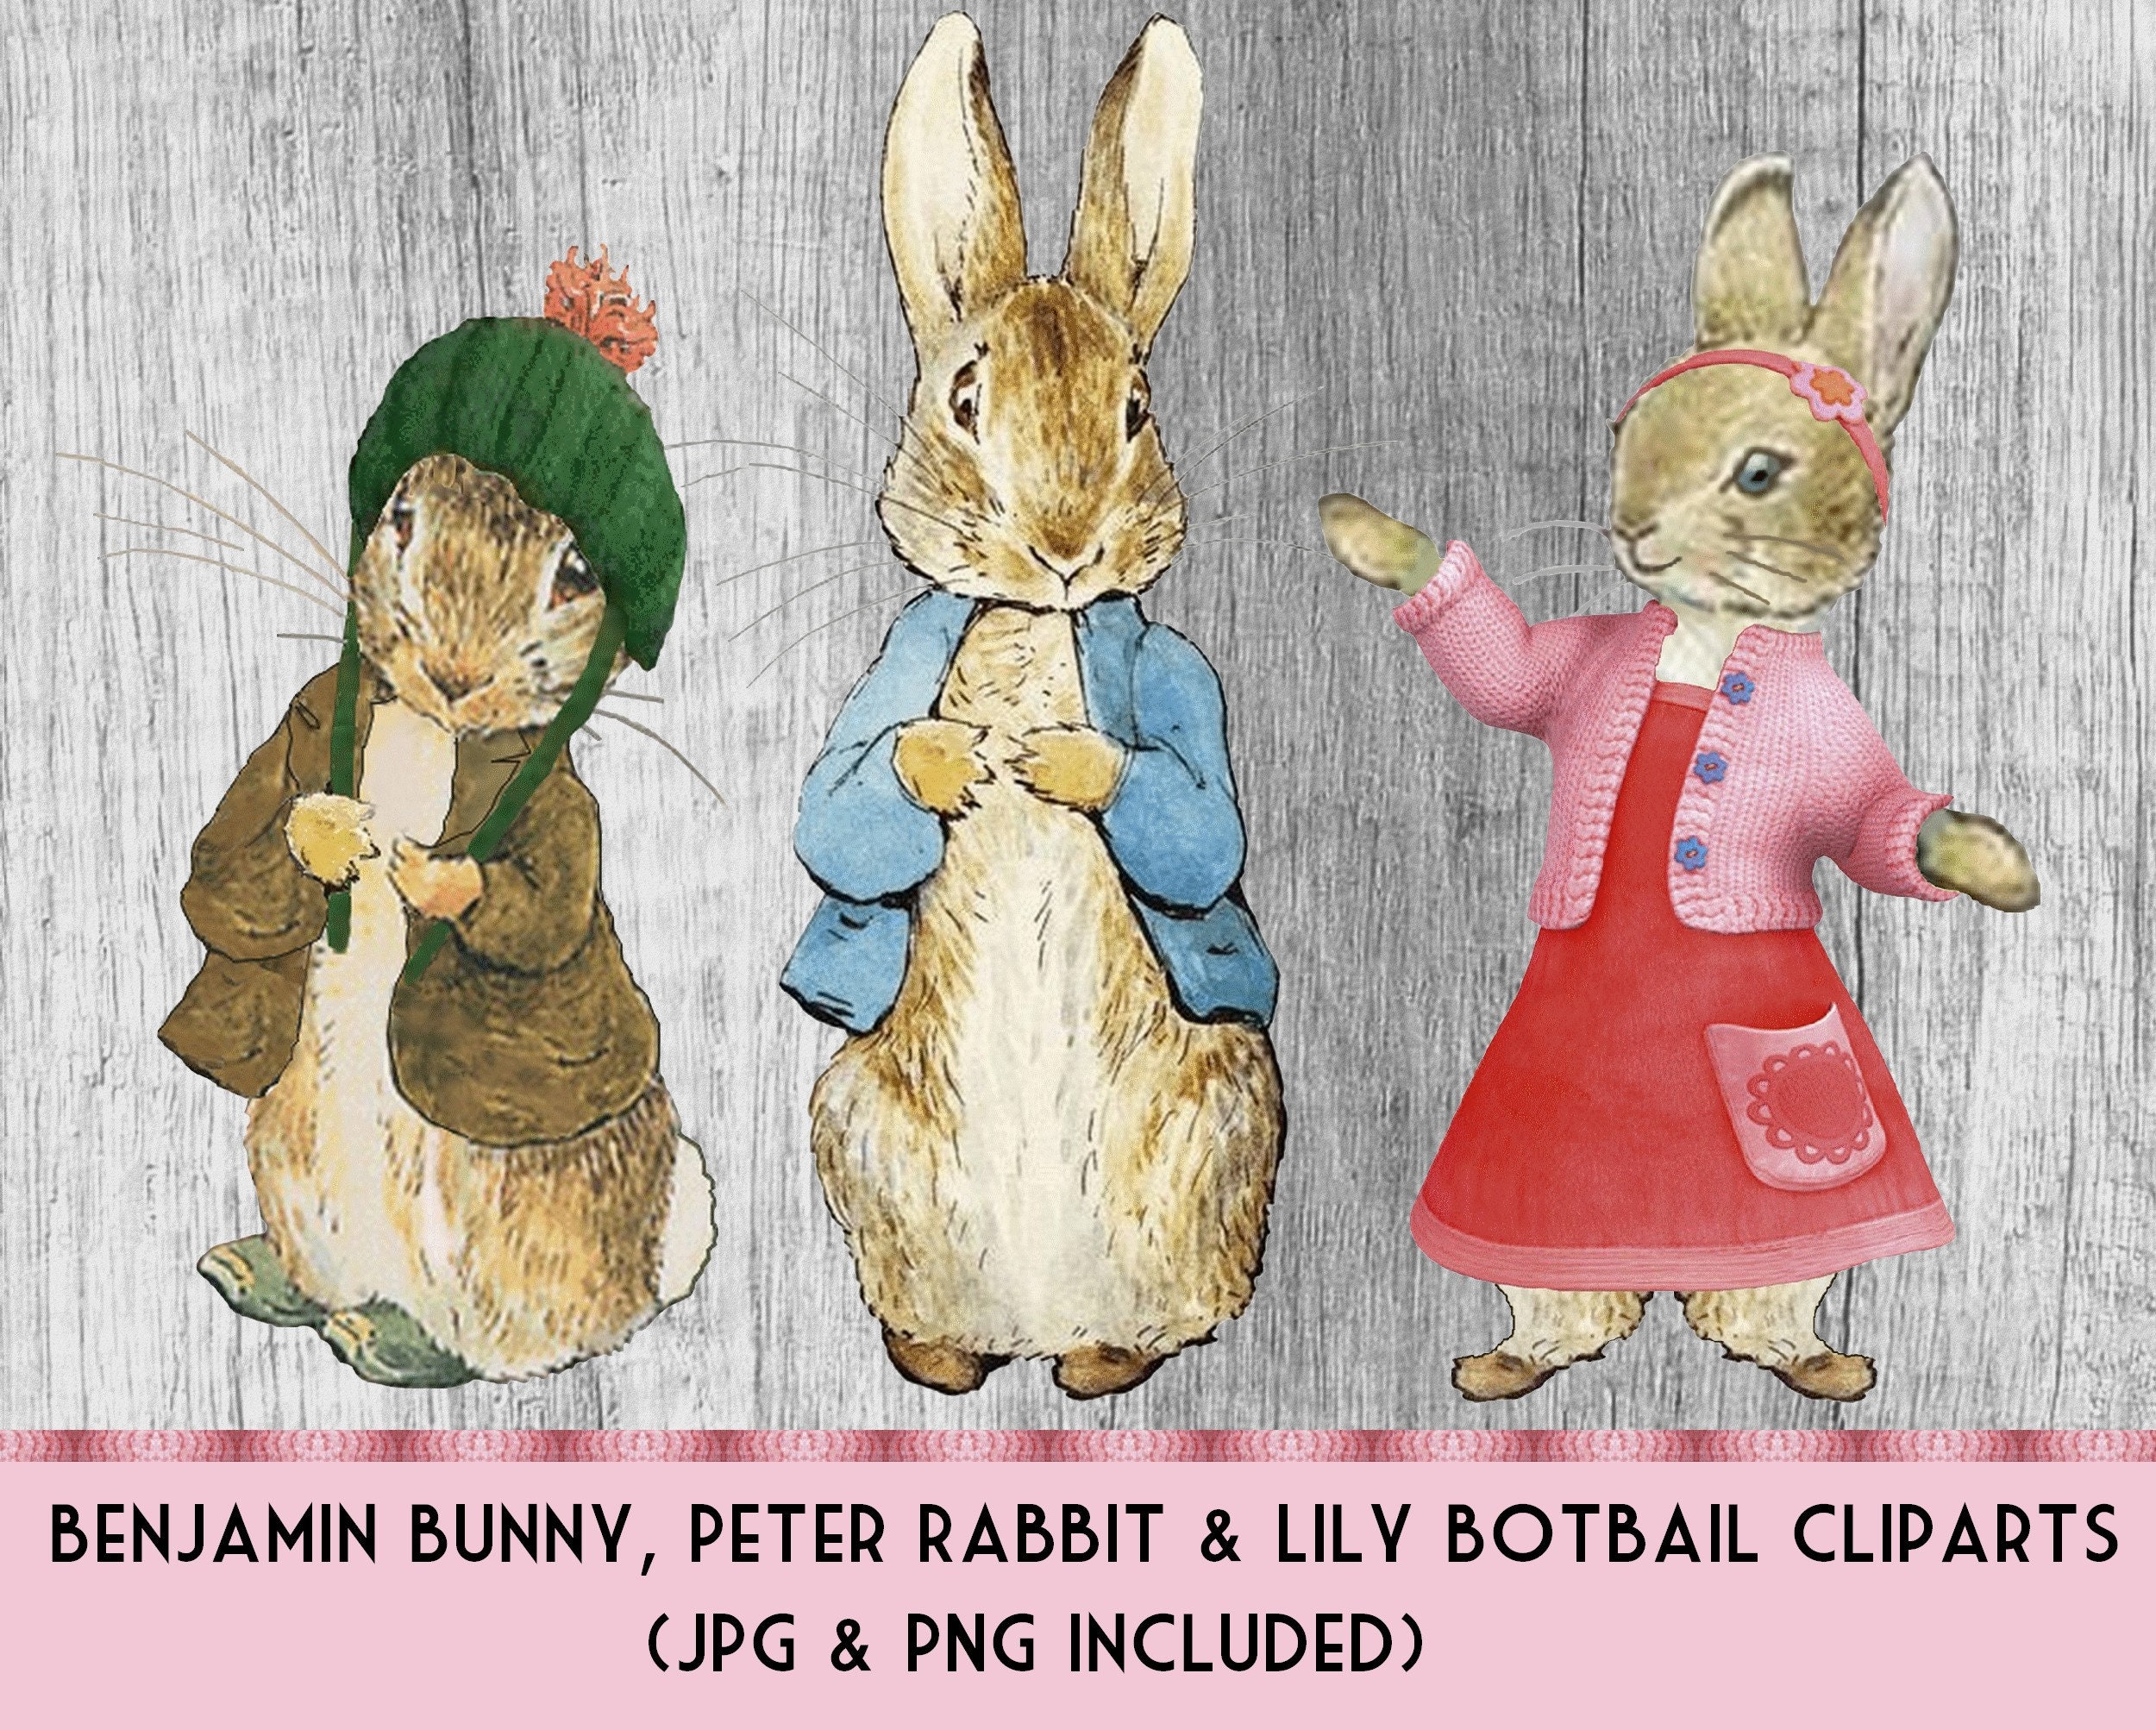 Peter Rabbit Illustrations Public Domain